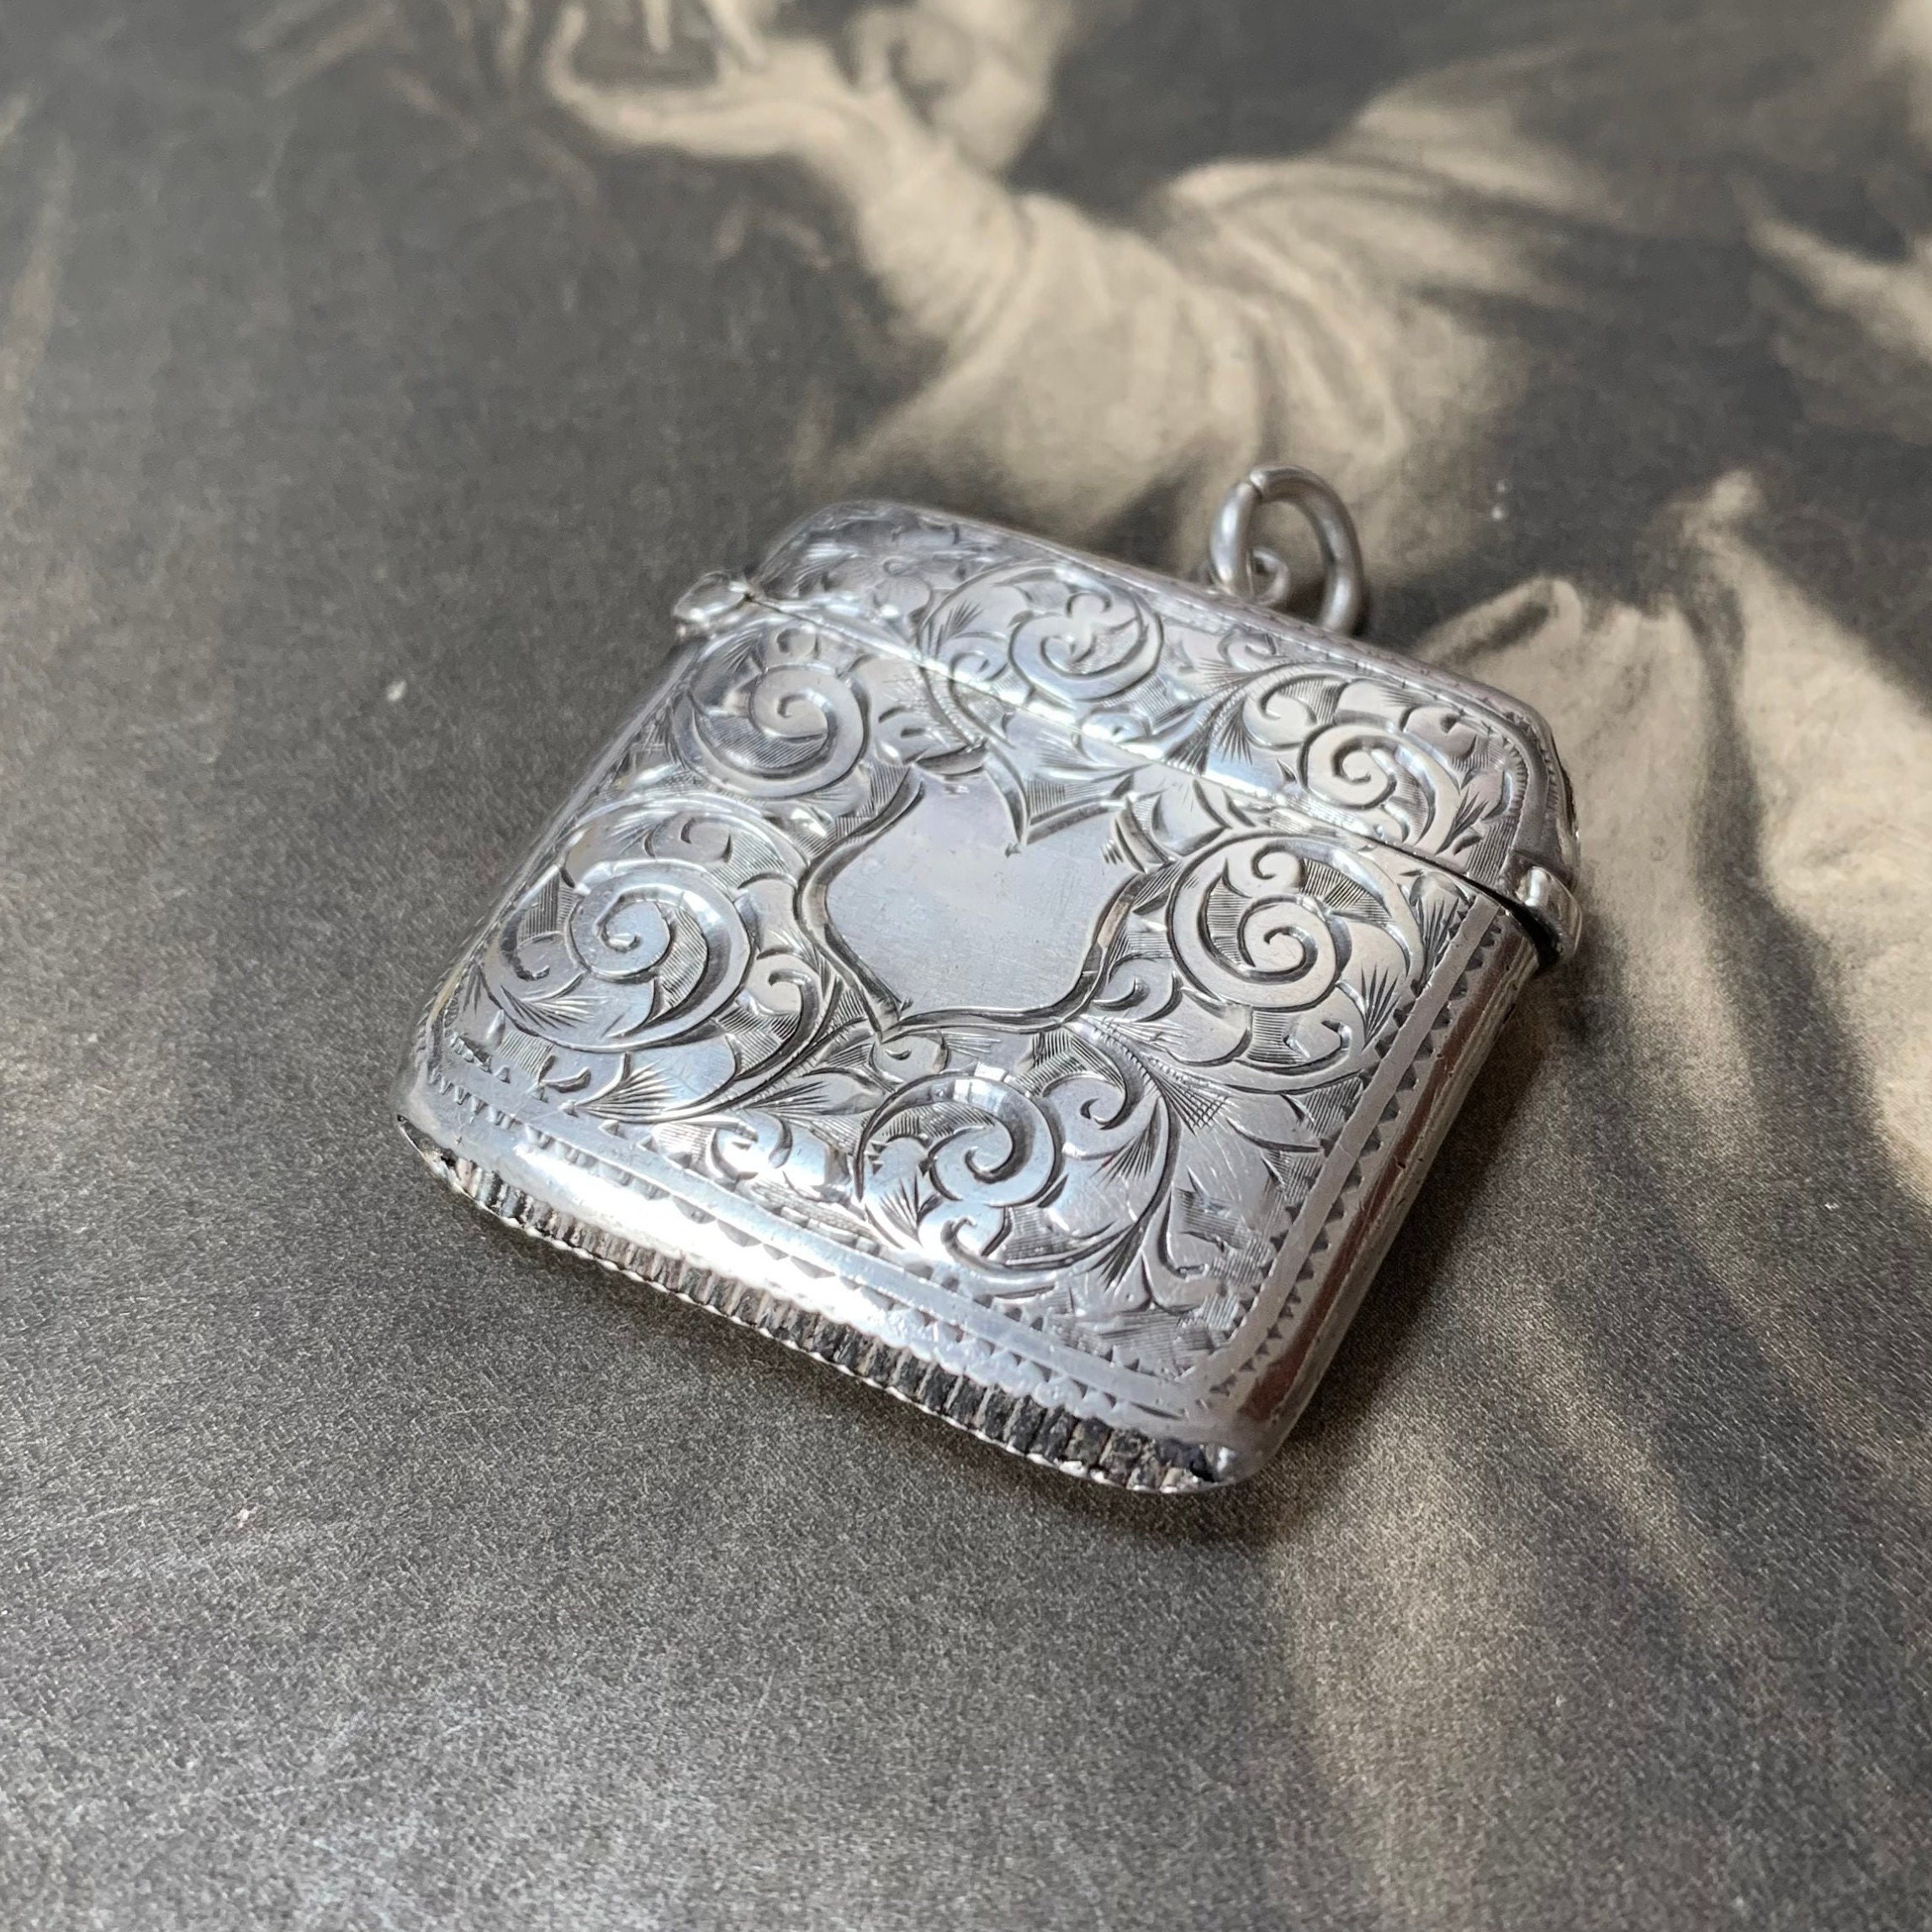 Edwardian Sterling Silver Pendant Locket. Antique Vesta Keepsake Case Dates 1903 With Full English Hallmarks